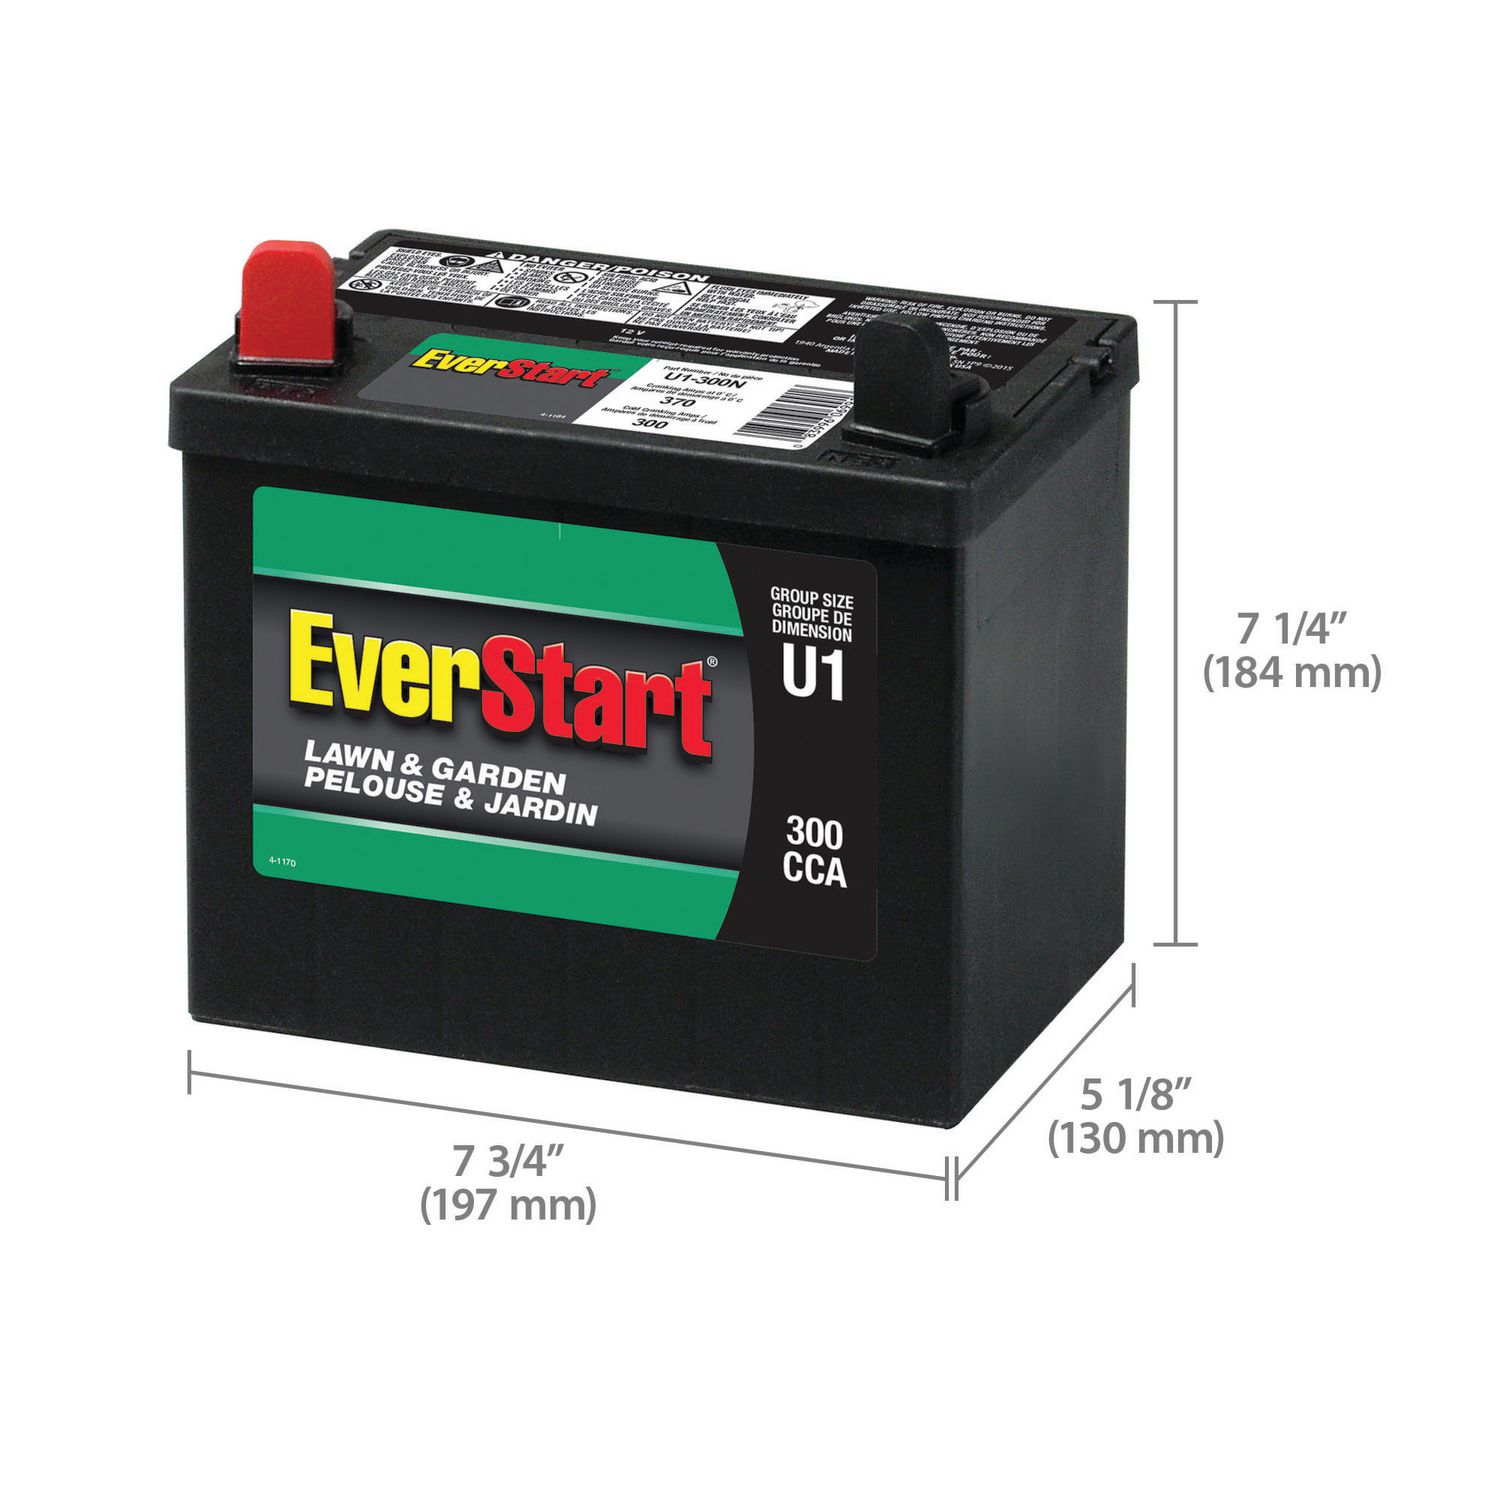 EverStart LAWN GARDEN U1-300N Battery, 12 Volt, Lawn & Garden Battery,  Group Size U1, 300 CCA, Group size U1, 300 CCA 